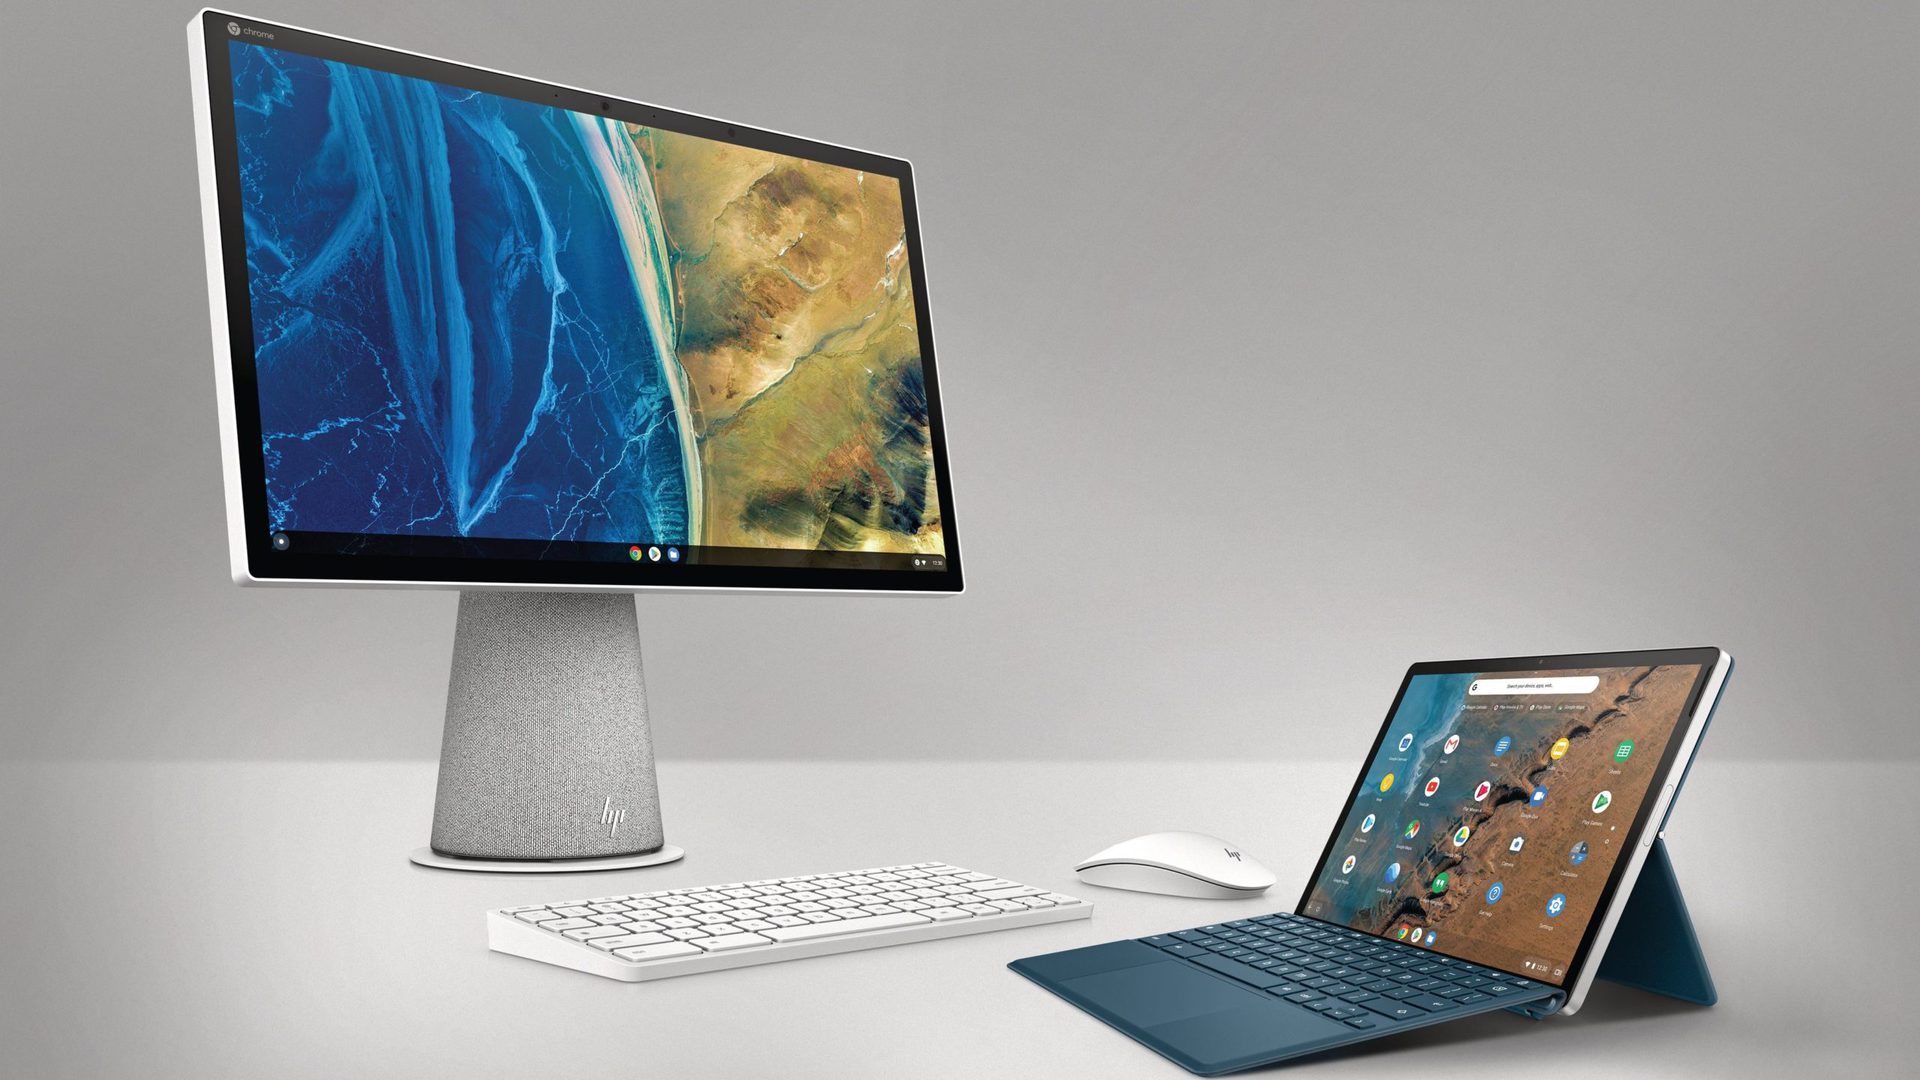 HP’s new Chrome OS lineup includes a Chromebook detachable and an AIO desktop